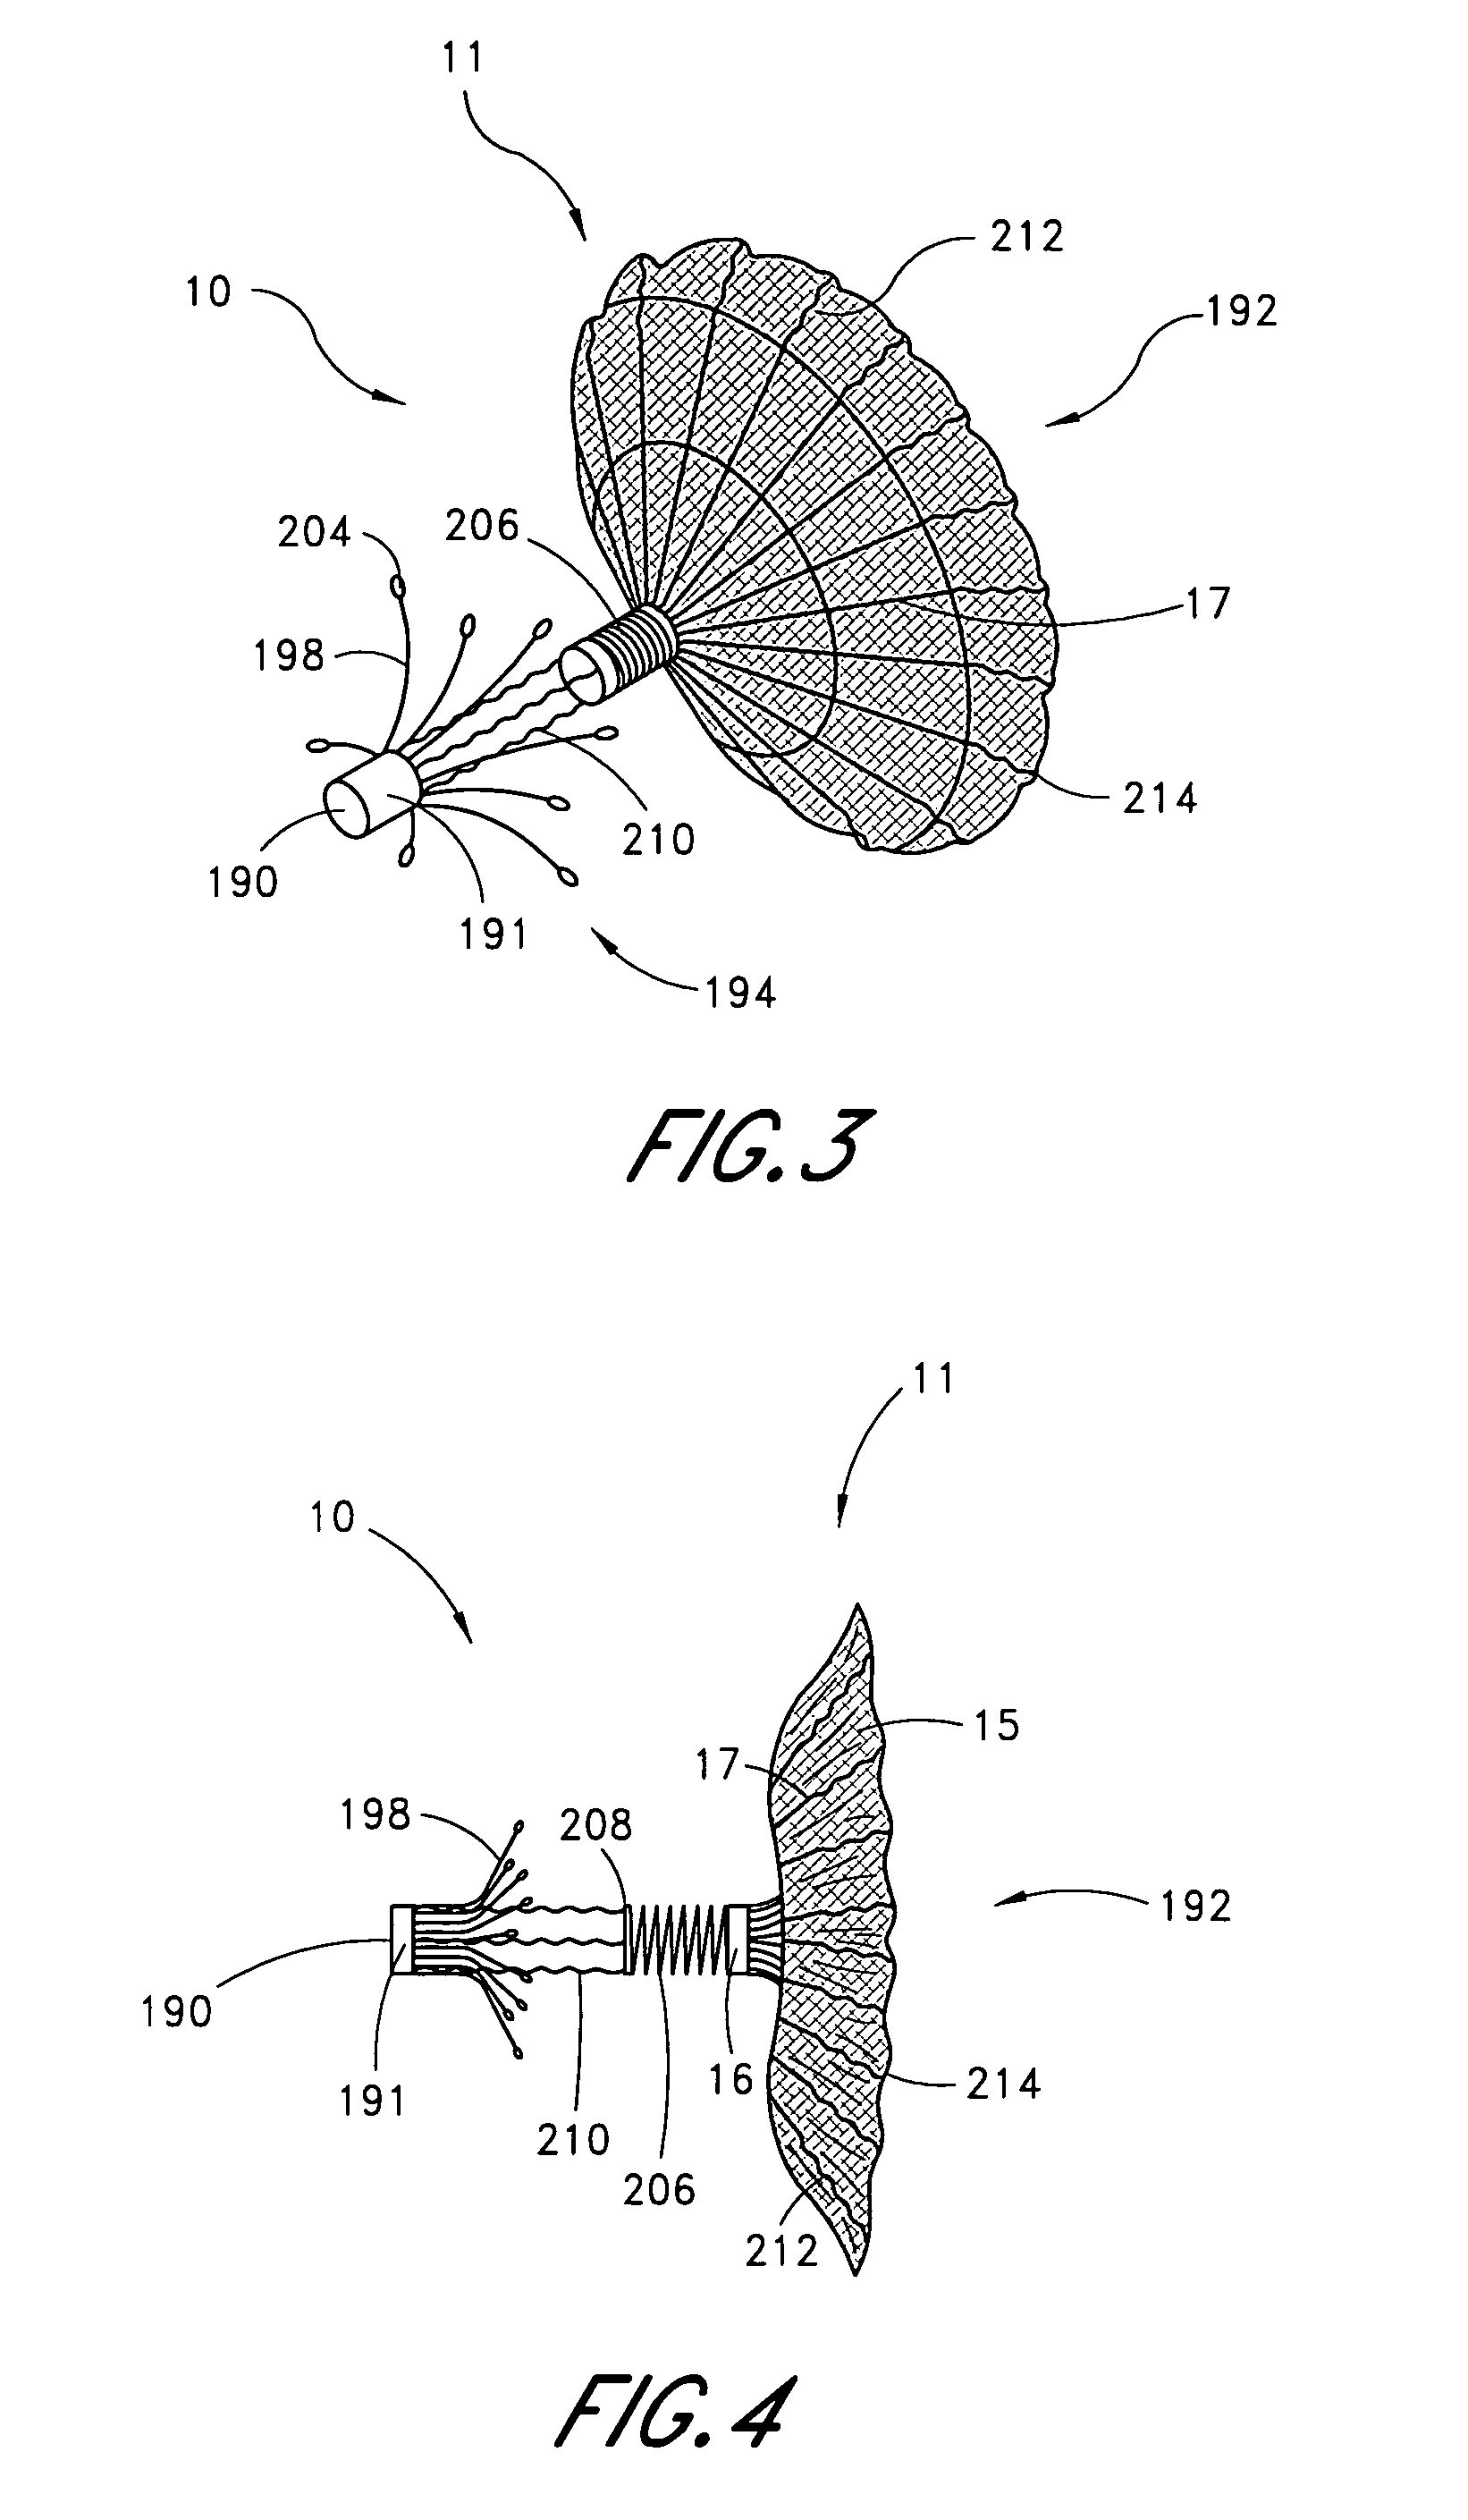 Detachable atrial appendage occlusion balloon